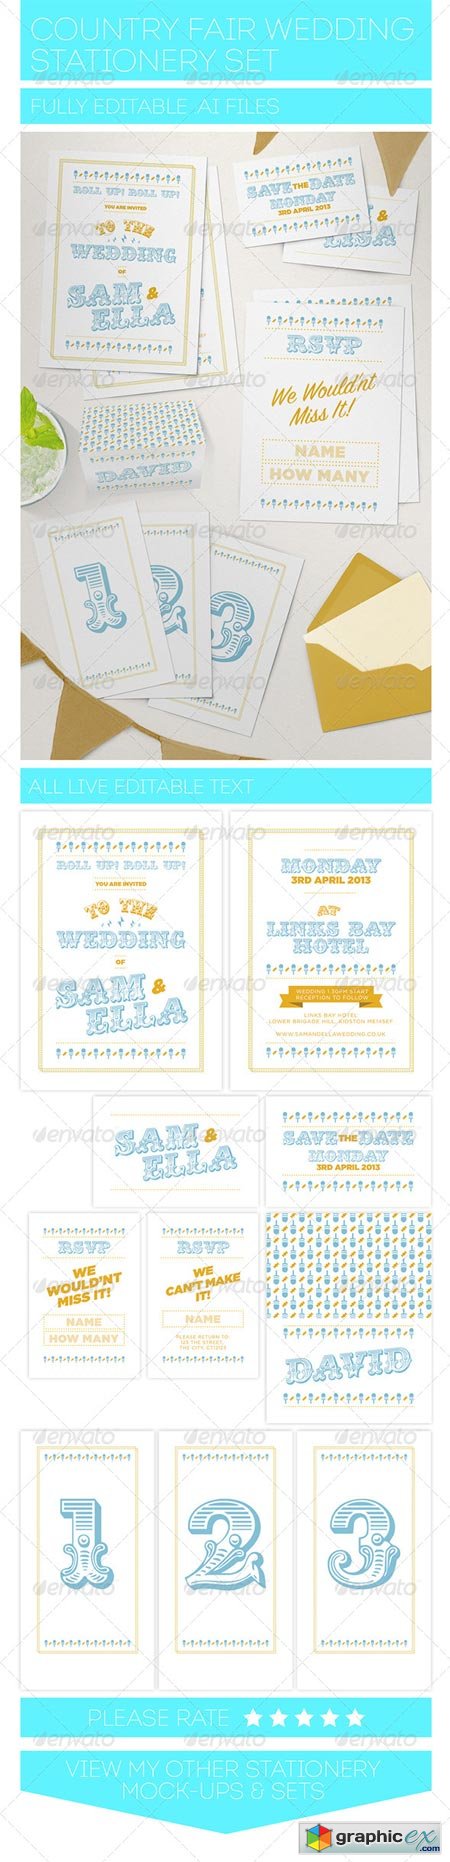 GraphicRiver Country Fair Wedding Stationery Set 6501785